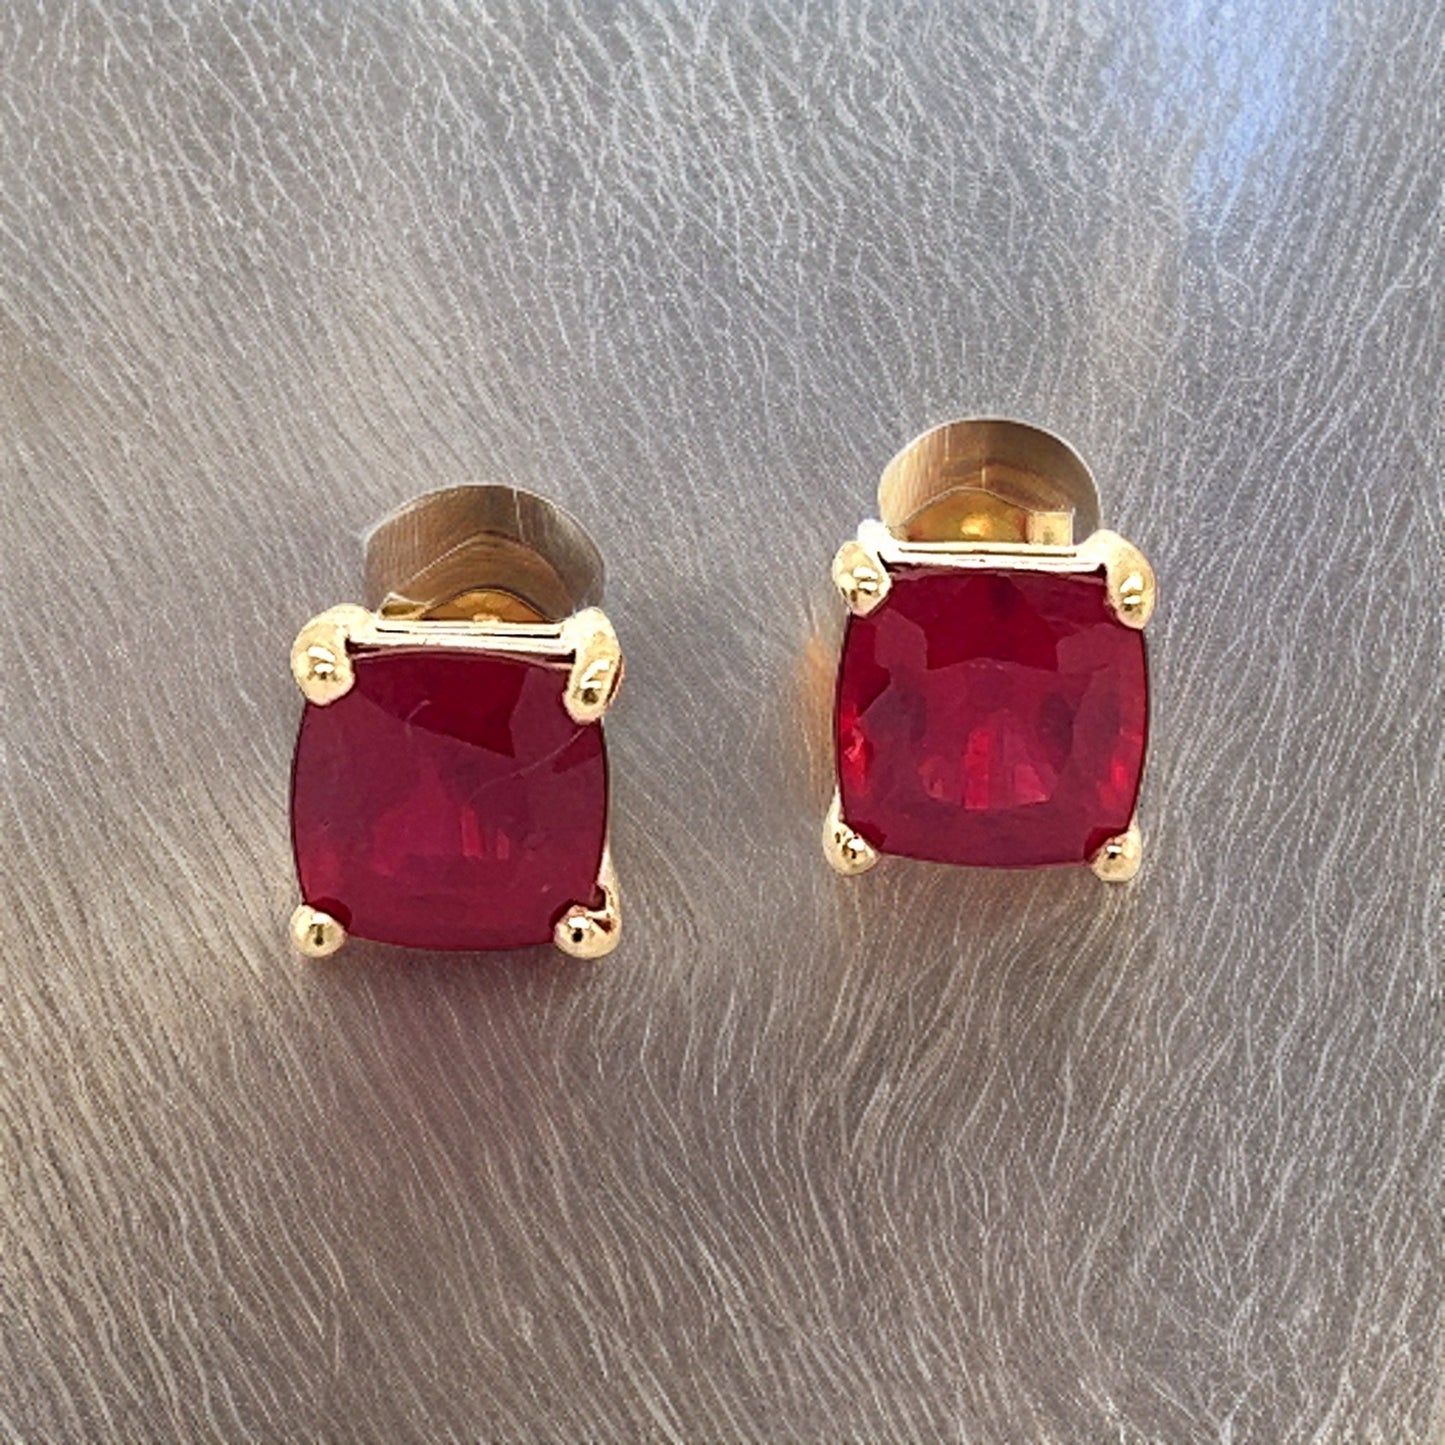 Natural Ruby Stud Earrings 14k Yellow Gold 3.15 TW Certified $499 307912 - Certified Fine Jewelry